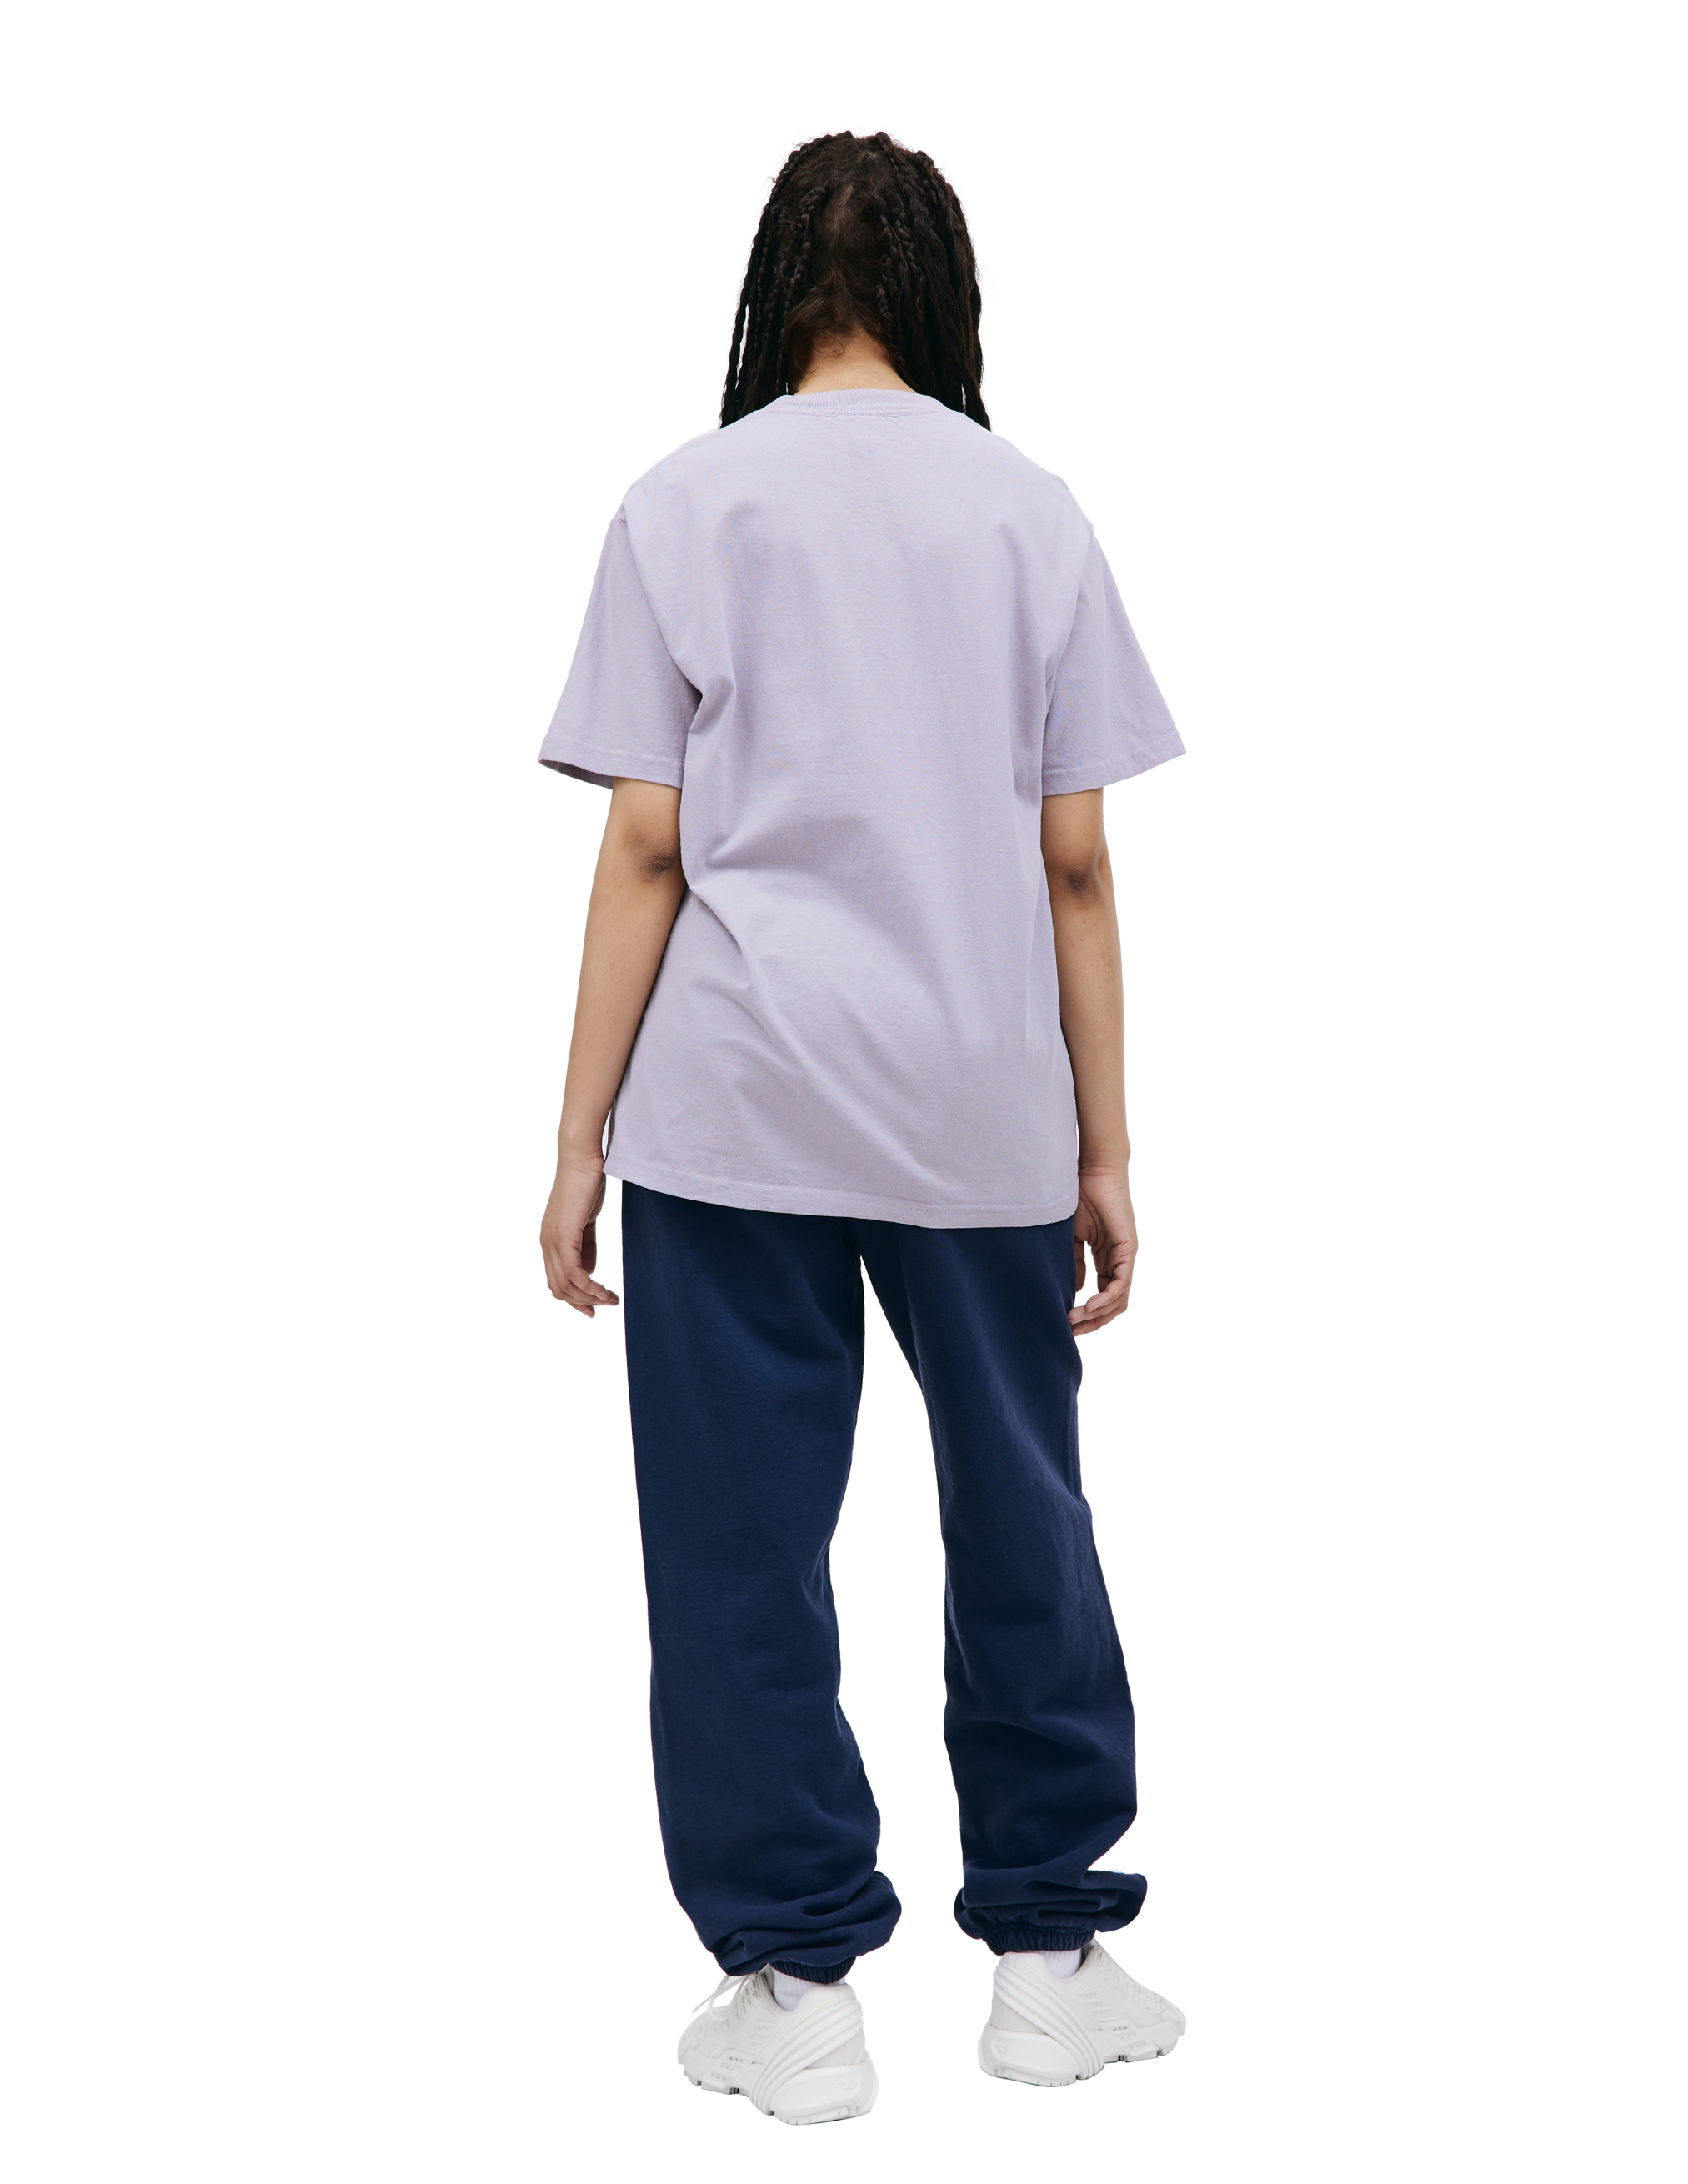 Хлопковая футболка Wellness Ivy SPORTY & RICH TS835LI, размер S;M;L;XL - фото 3